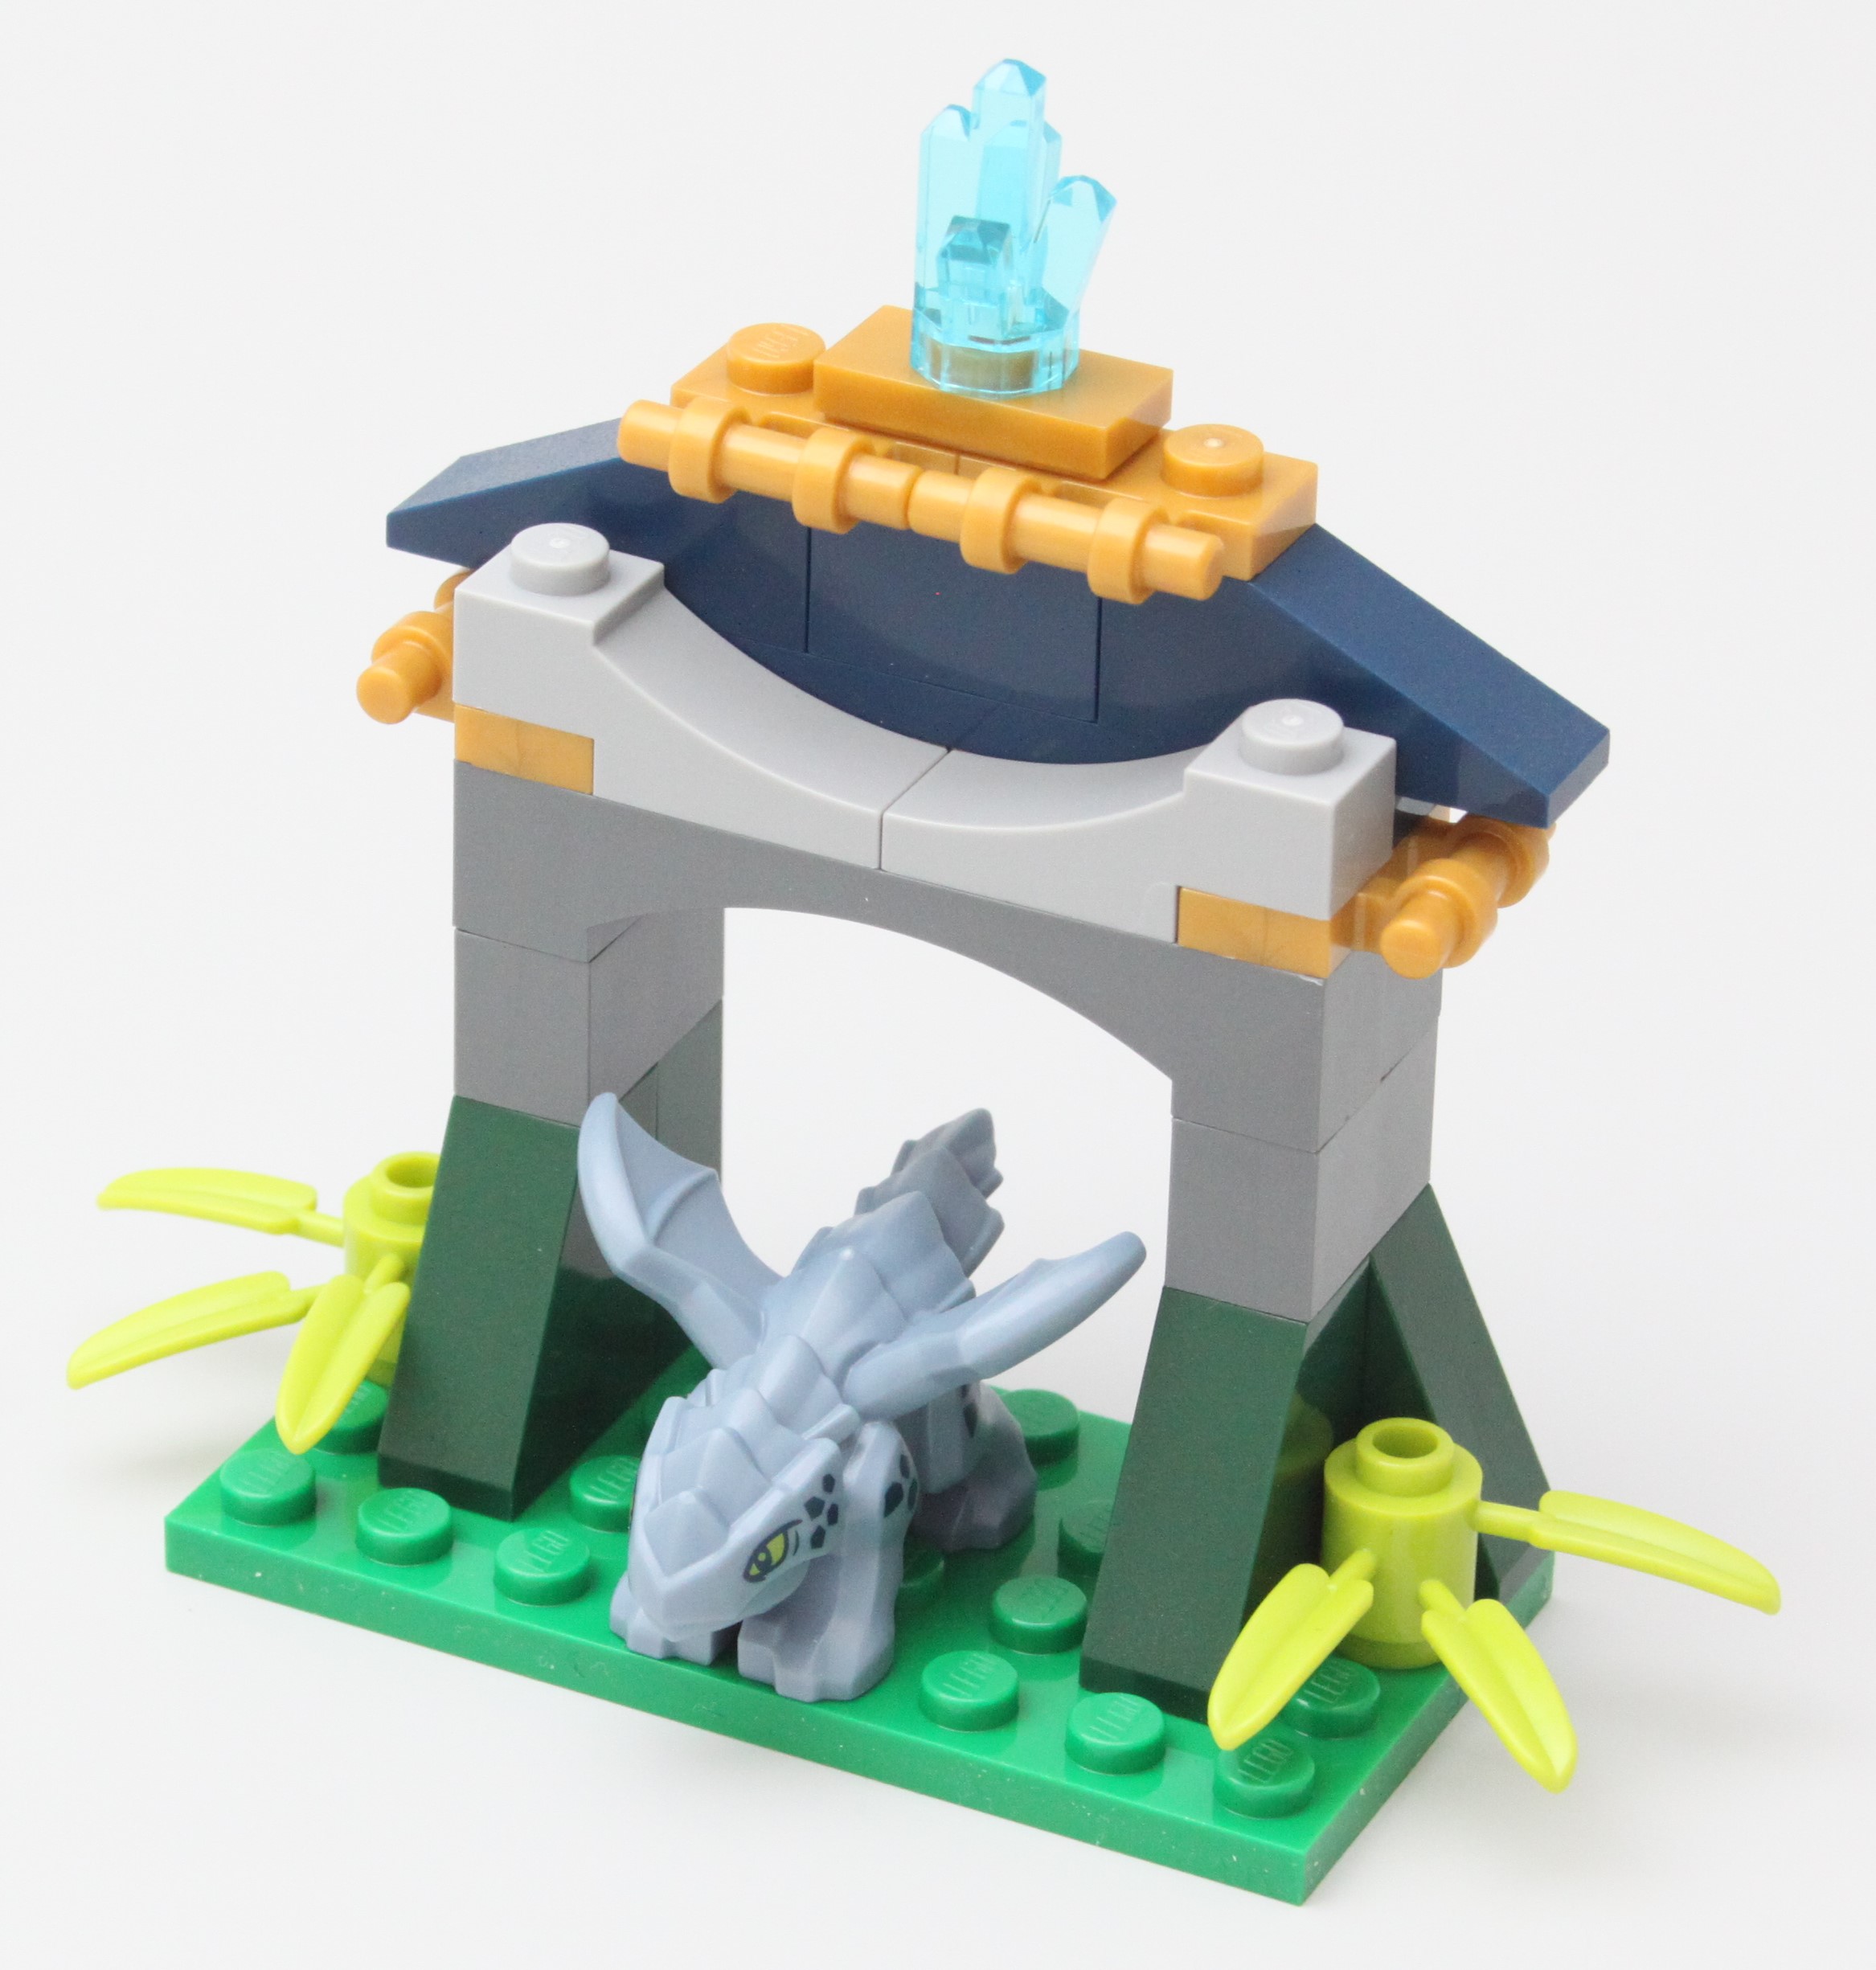 LEGO NINJAGO Nya and Arin's Baby Dragon Battle Building Toy 71798